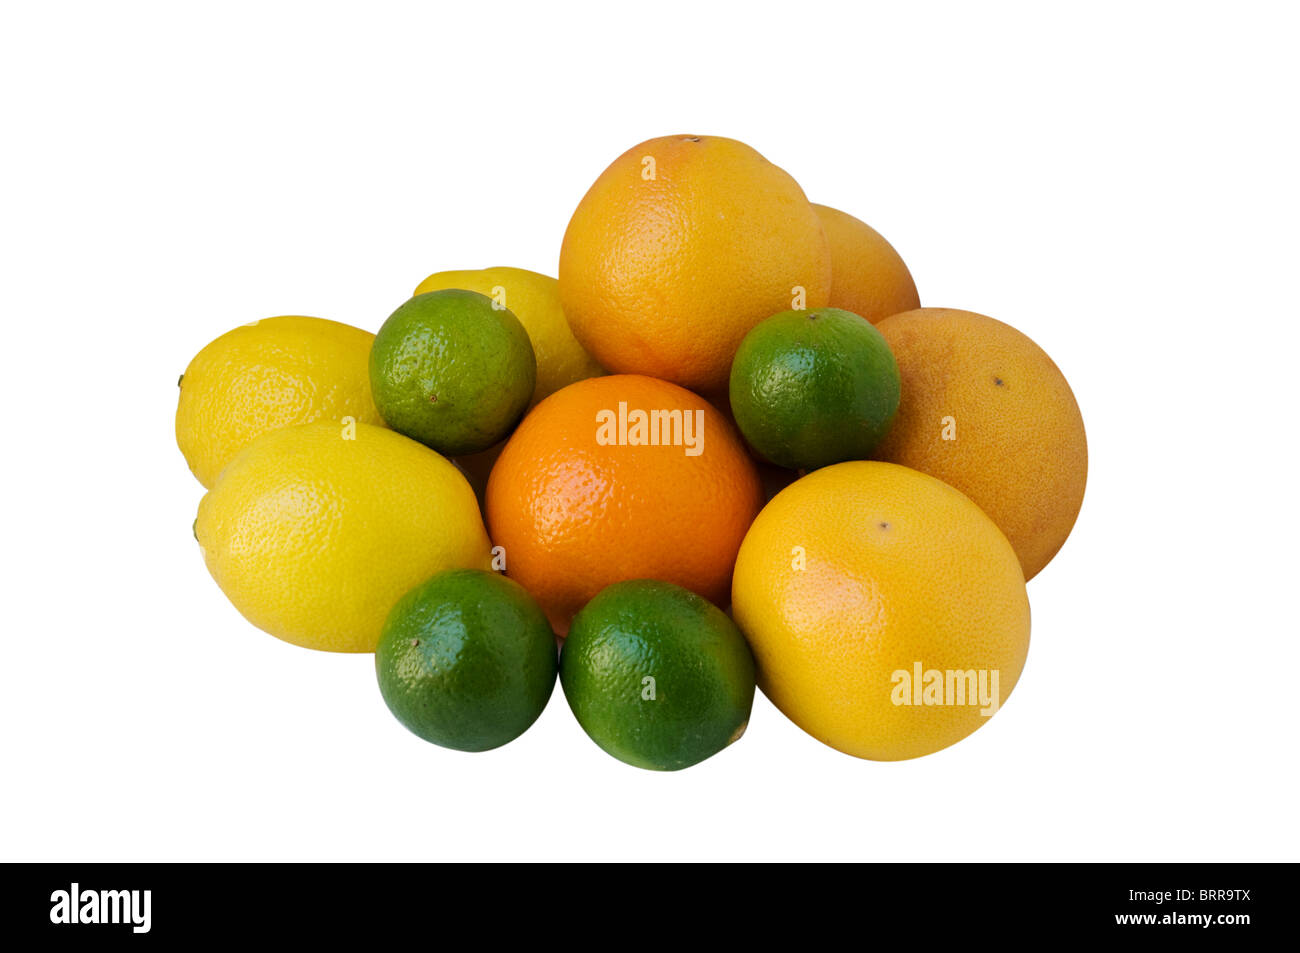 oranges,lemons and lime Stock Photo